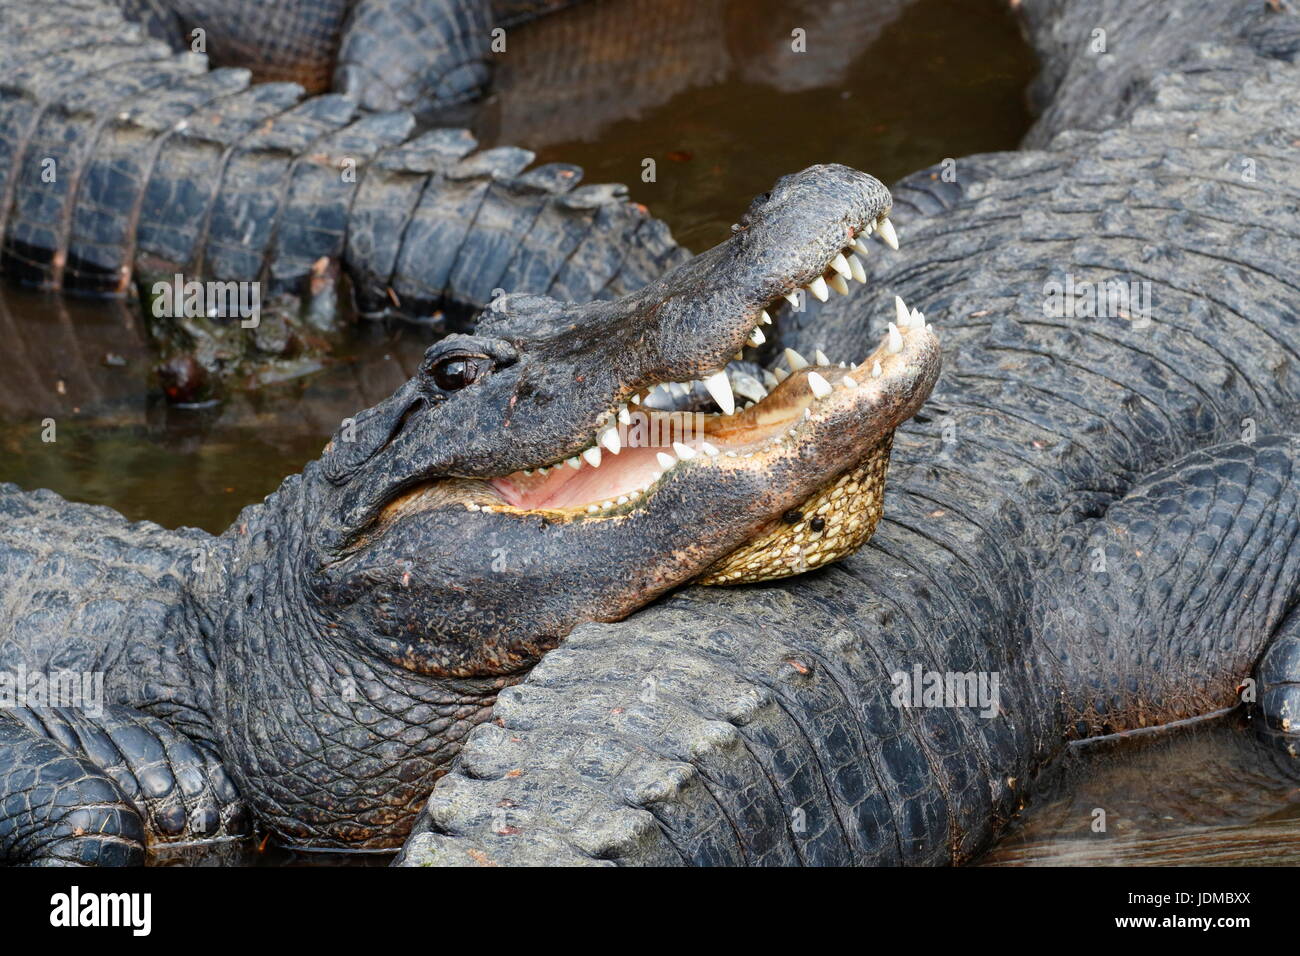 An American alligator, Alligator mississippiensis. Stock Photo